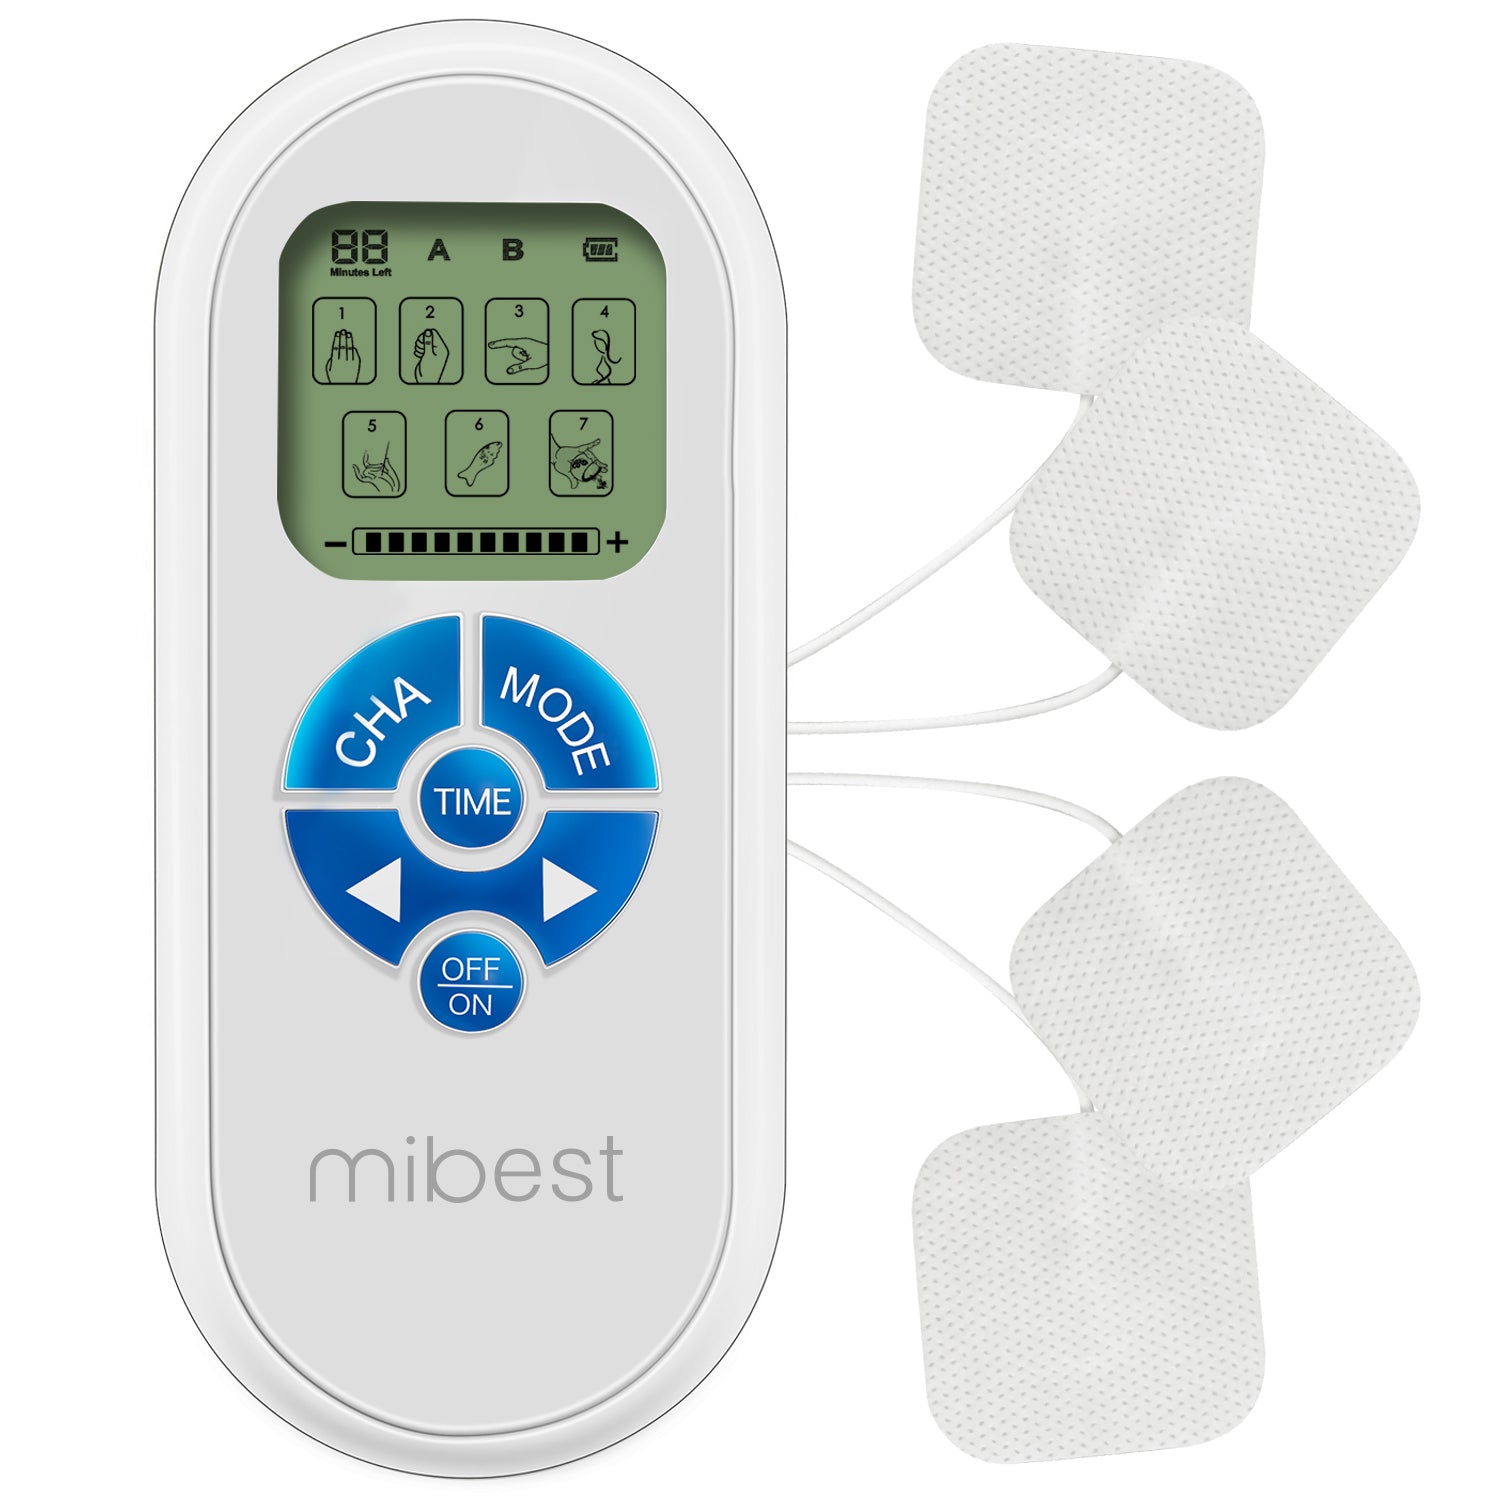 TENS Unit Muscle Stimulator - Portable Electronic Pulse Massager